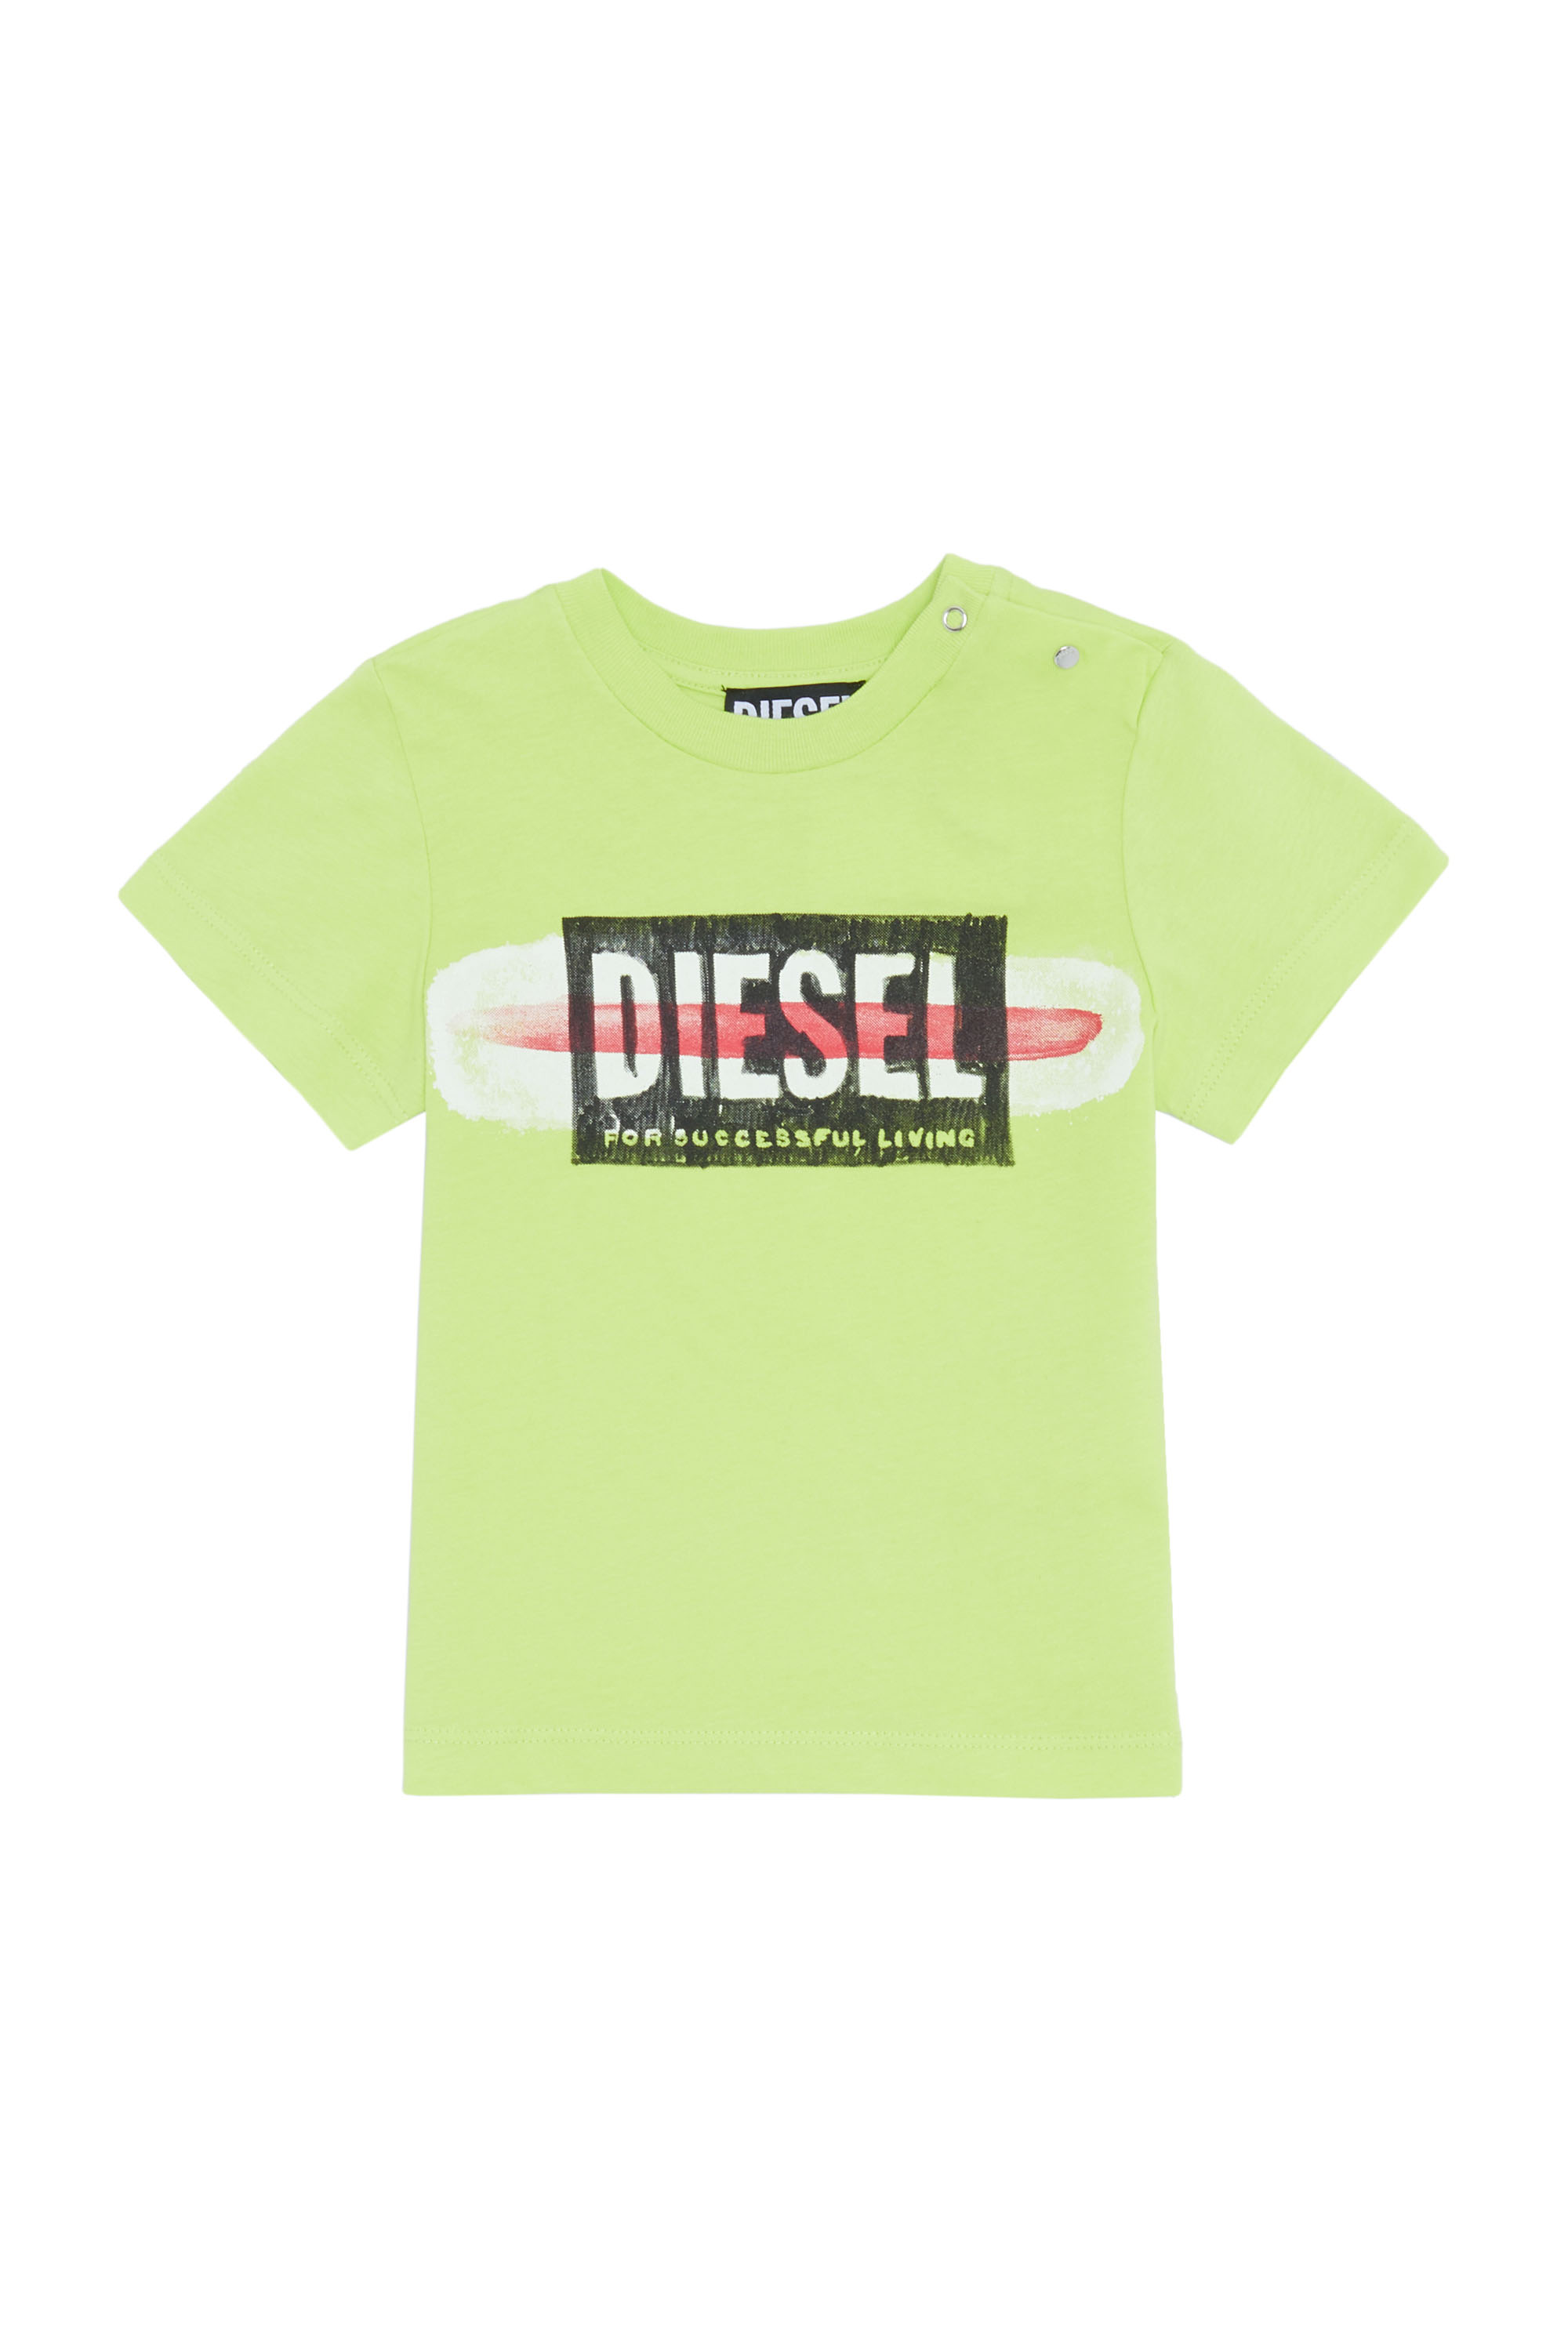 Diesel - TARYB, Yellow - Image 1